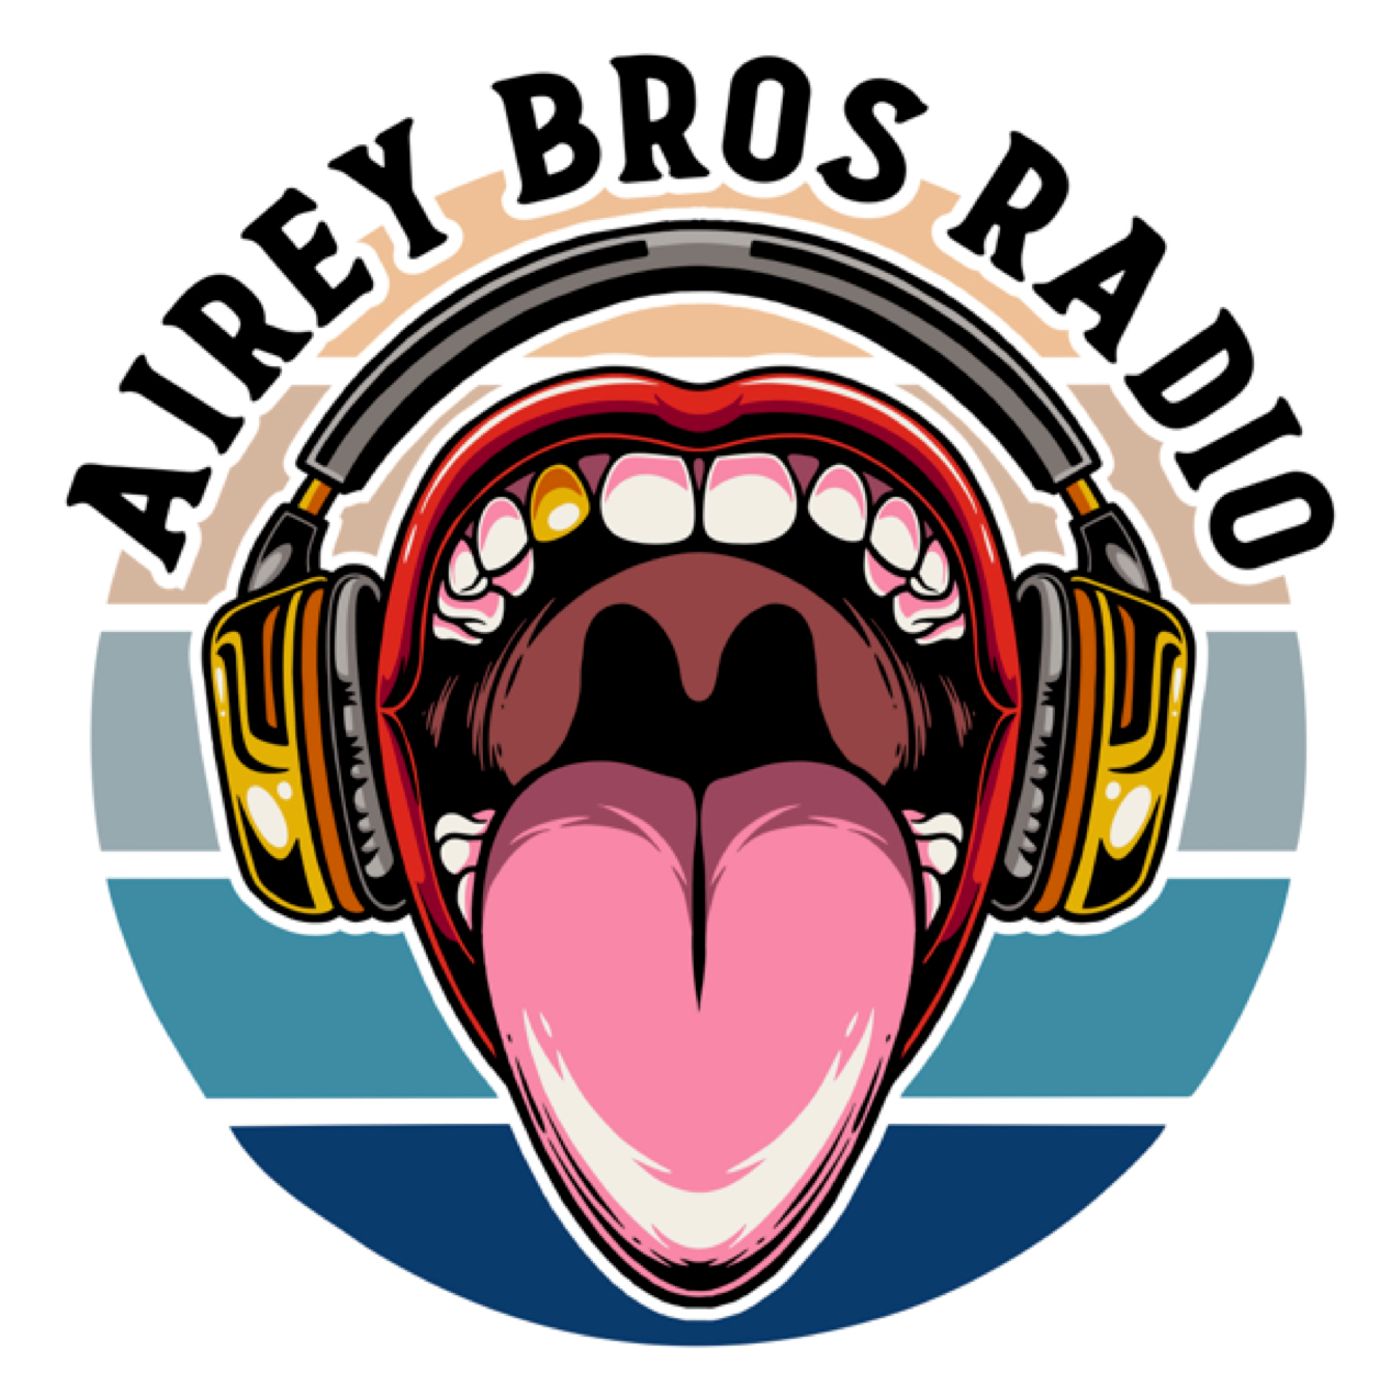 Airey Bros.’s Radio